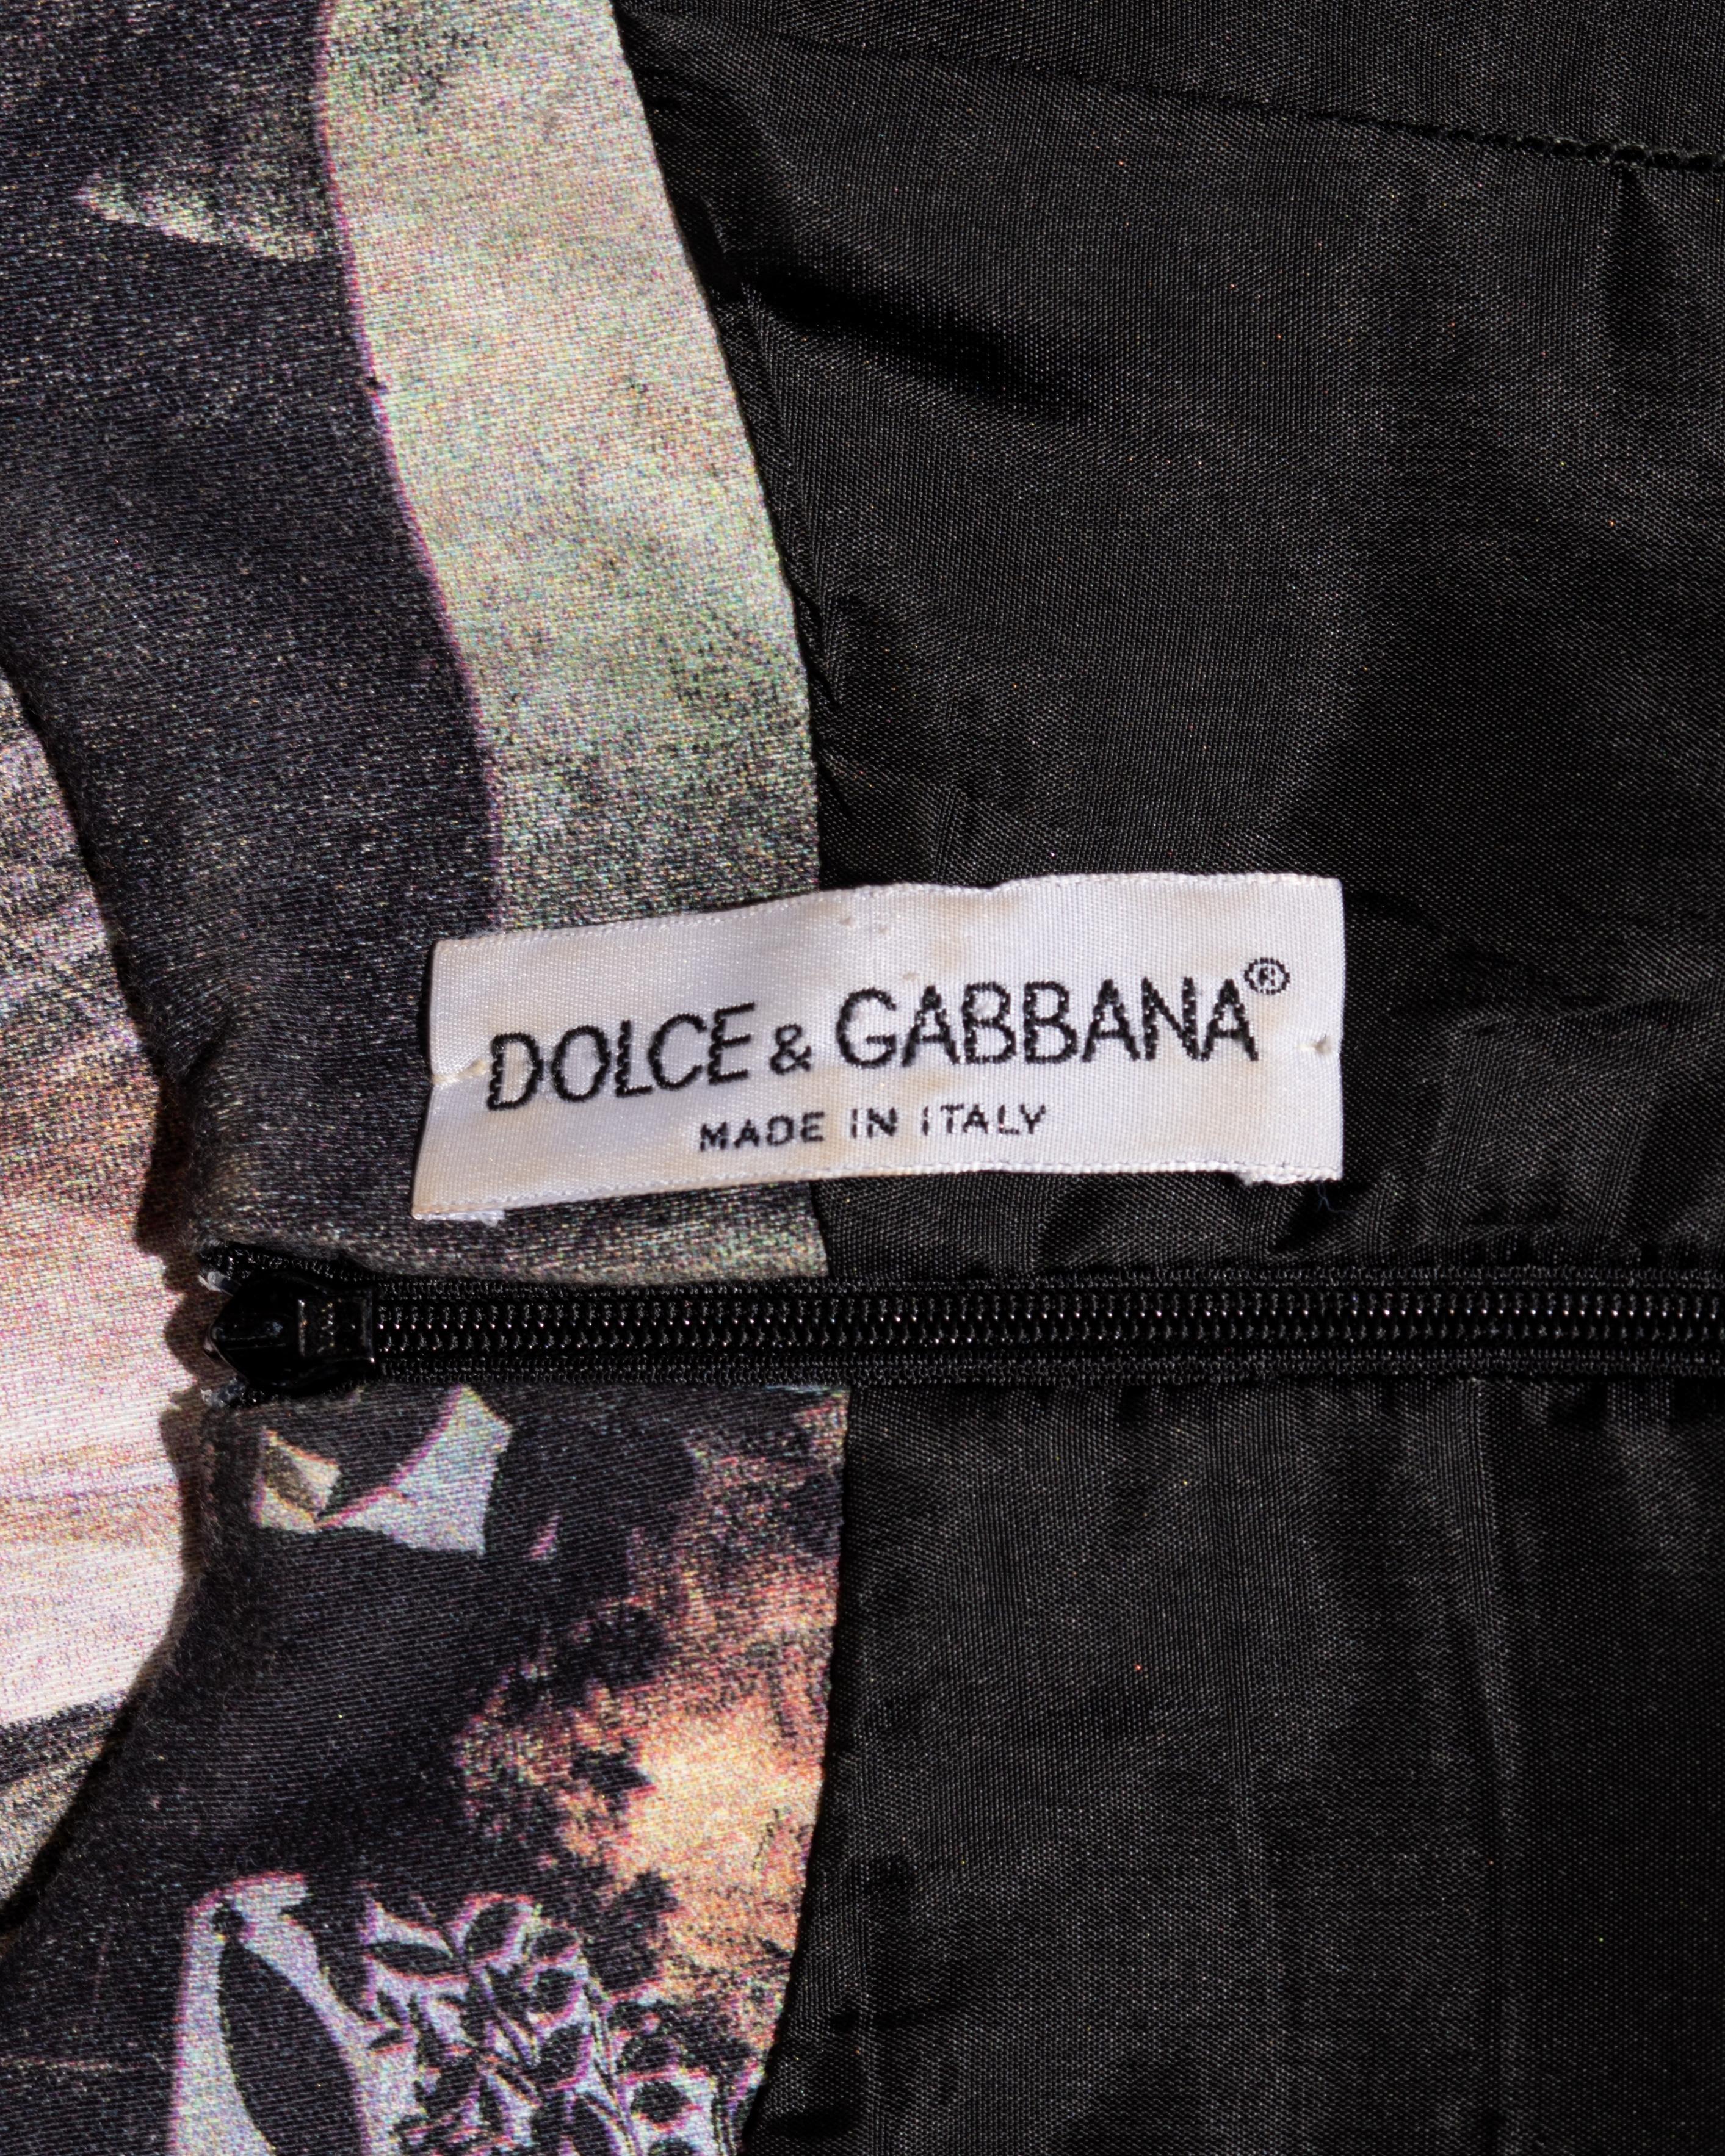 Dolce & Gabbana cotton sheath dress with renaissance print, ss 1993 3